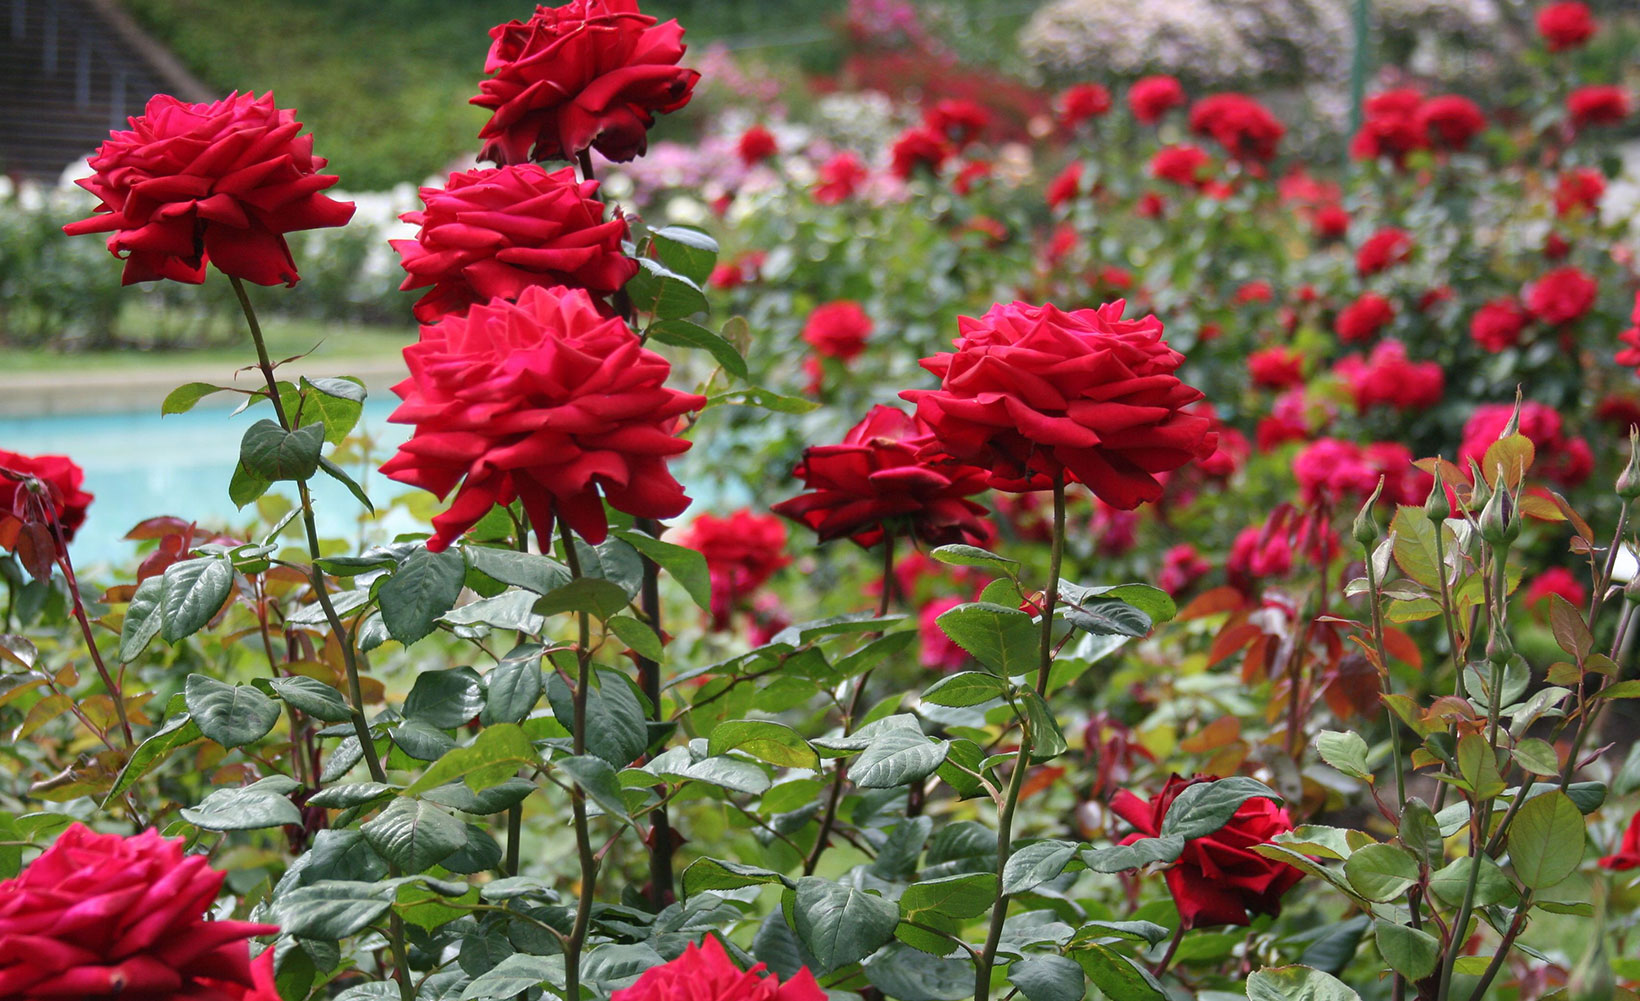 Chandigarh acogerá la Fiesta de la Rosa a partir del 28 de febrero